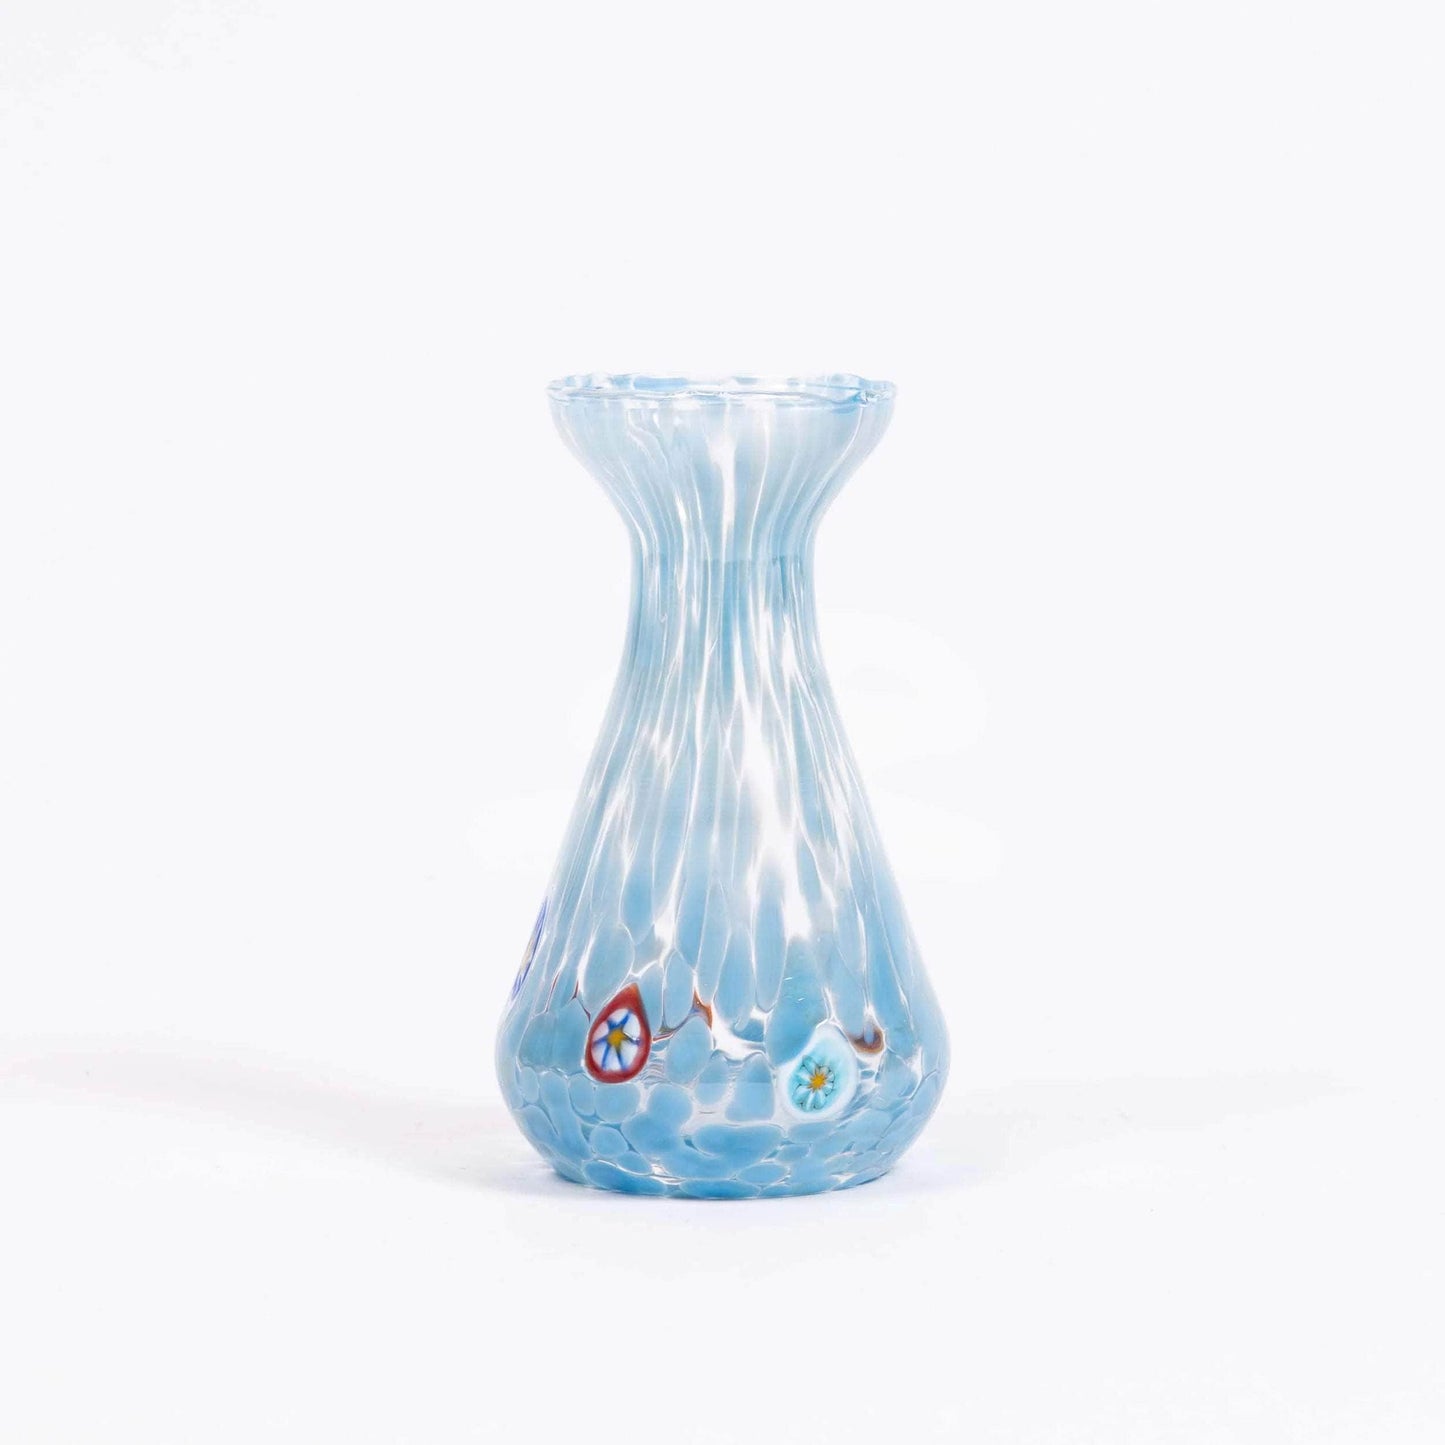 Azzurro Bud Vases